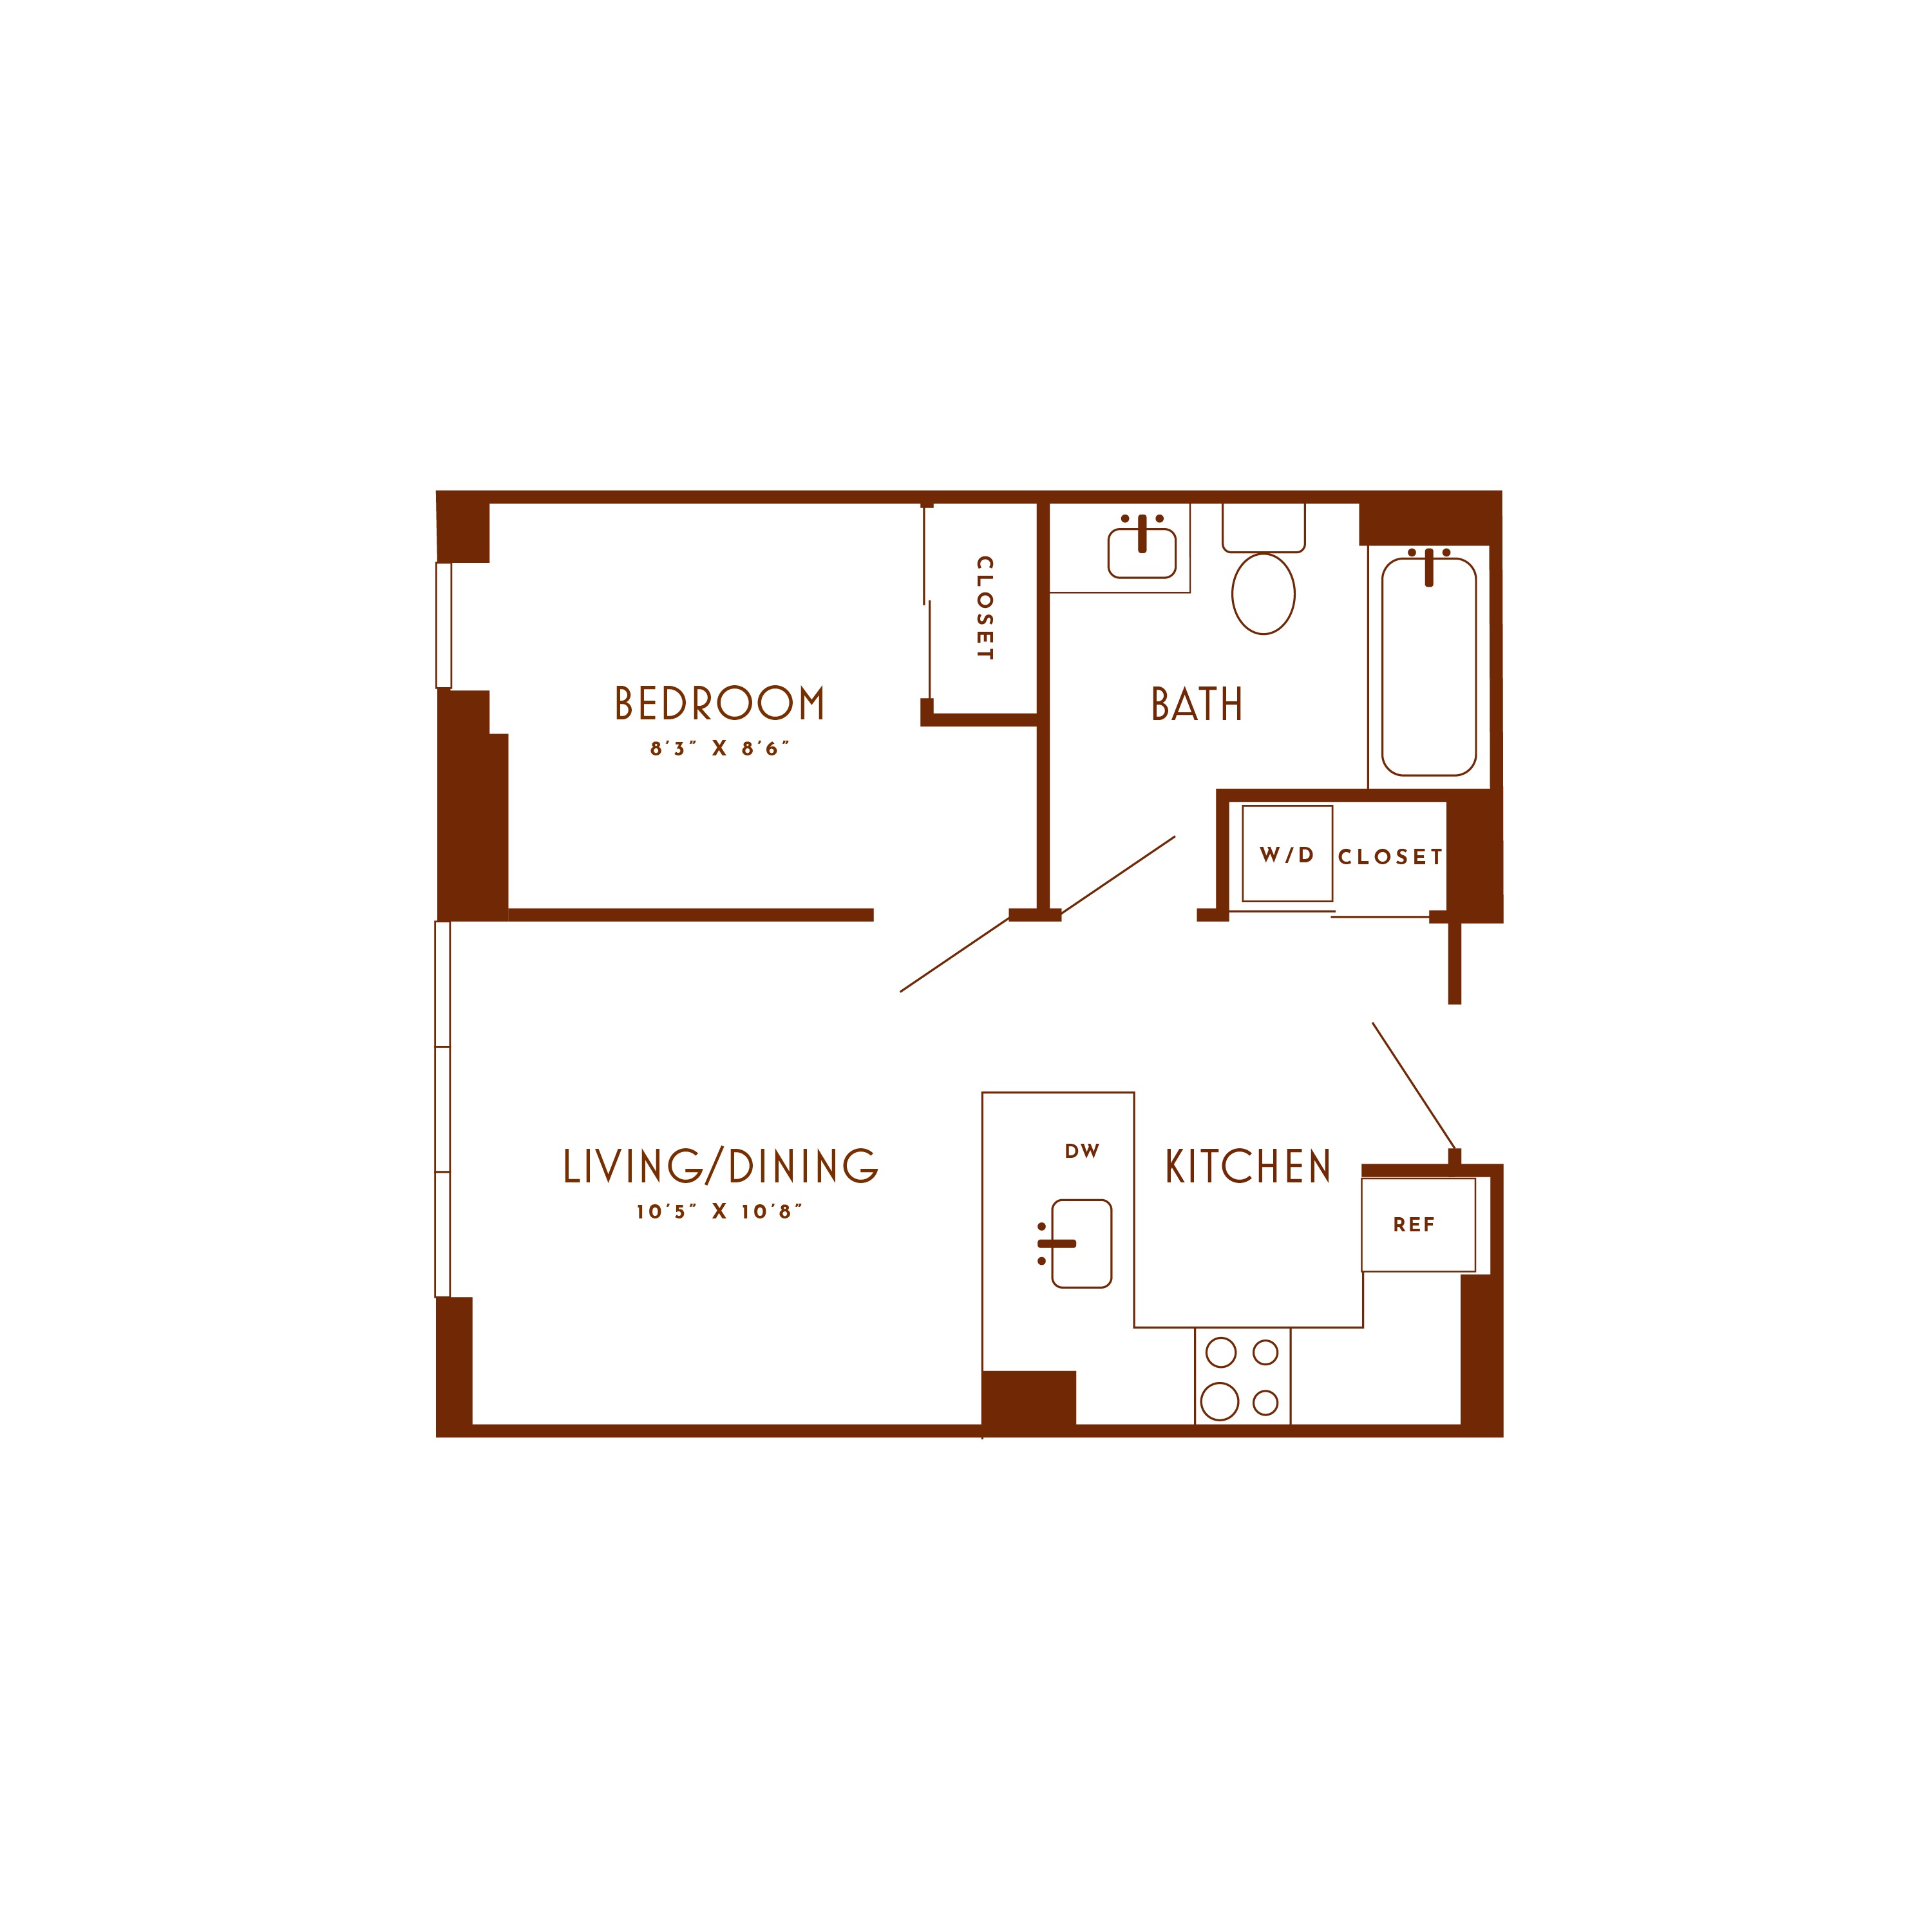 Floor plan image of unit 807